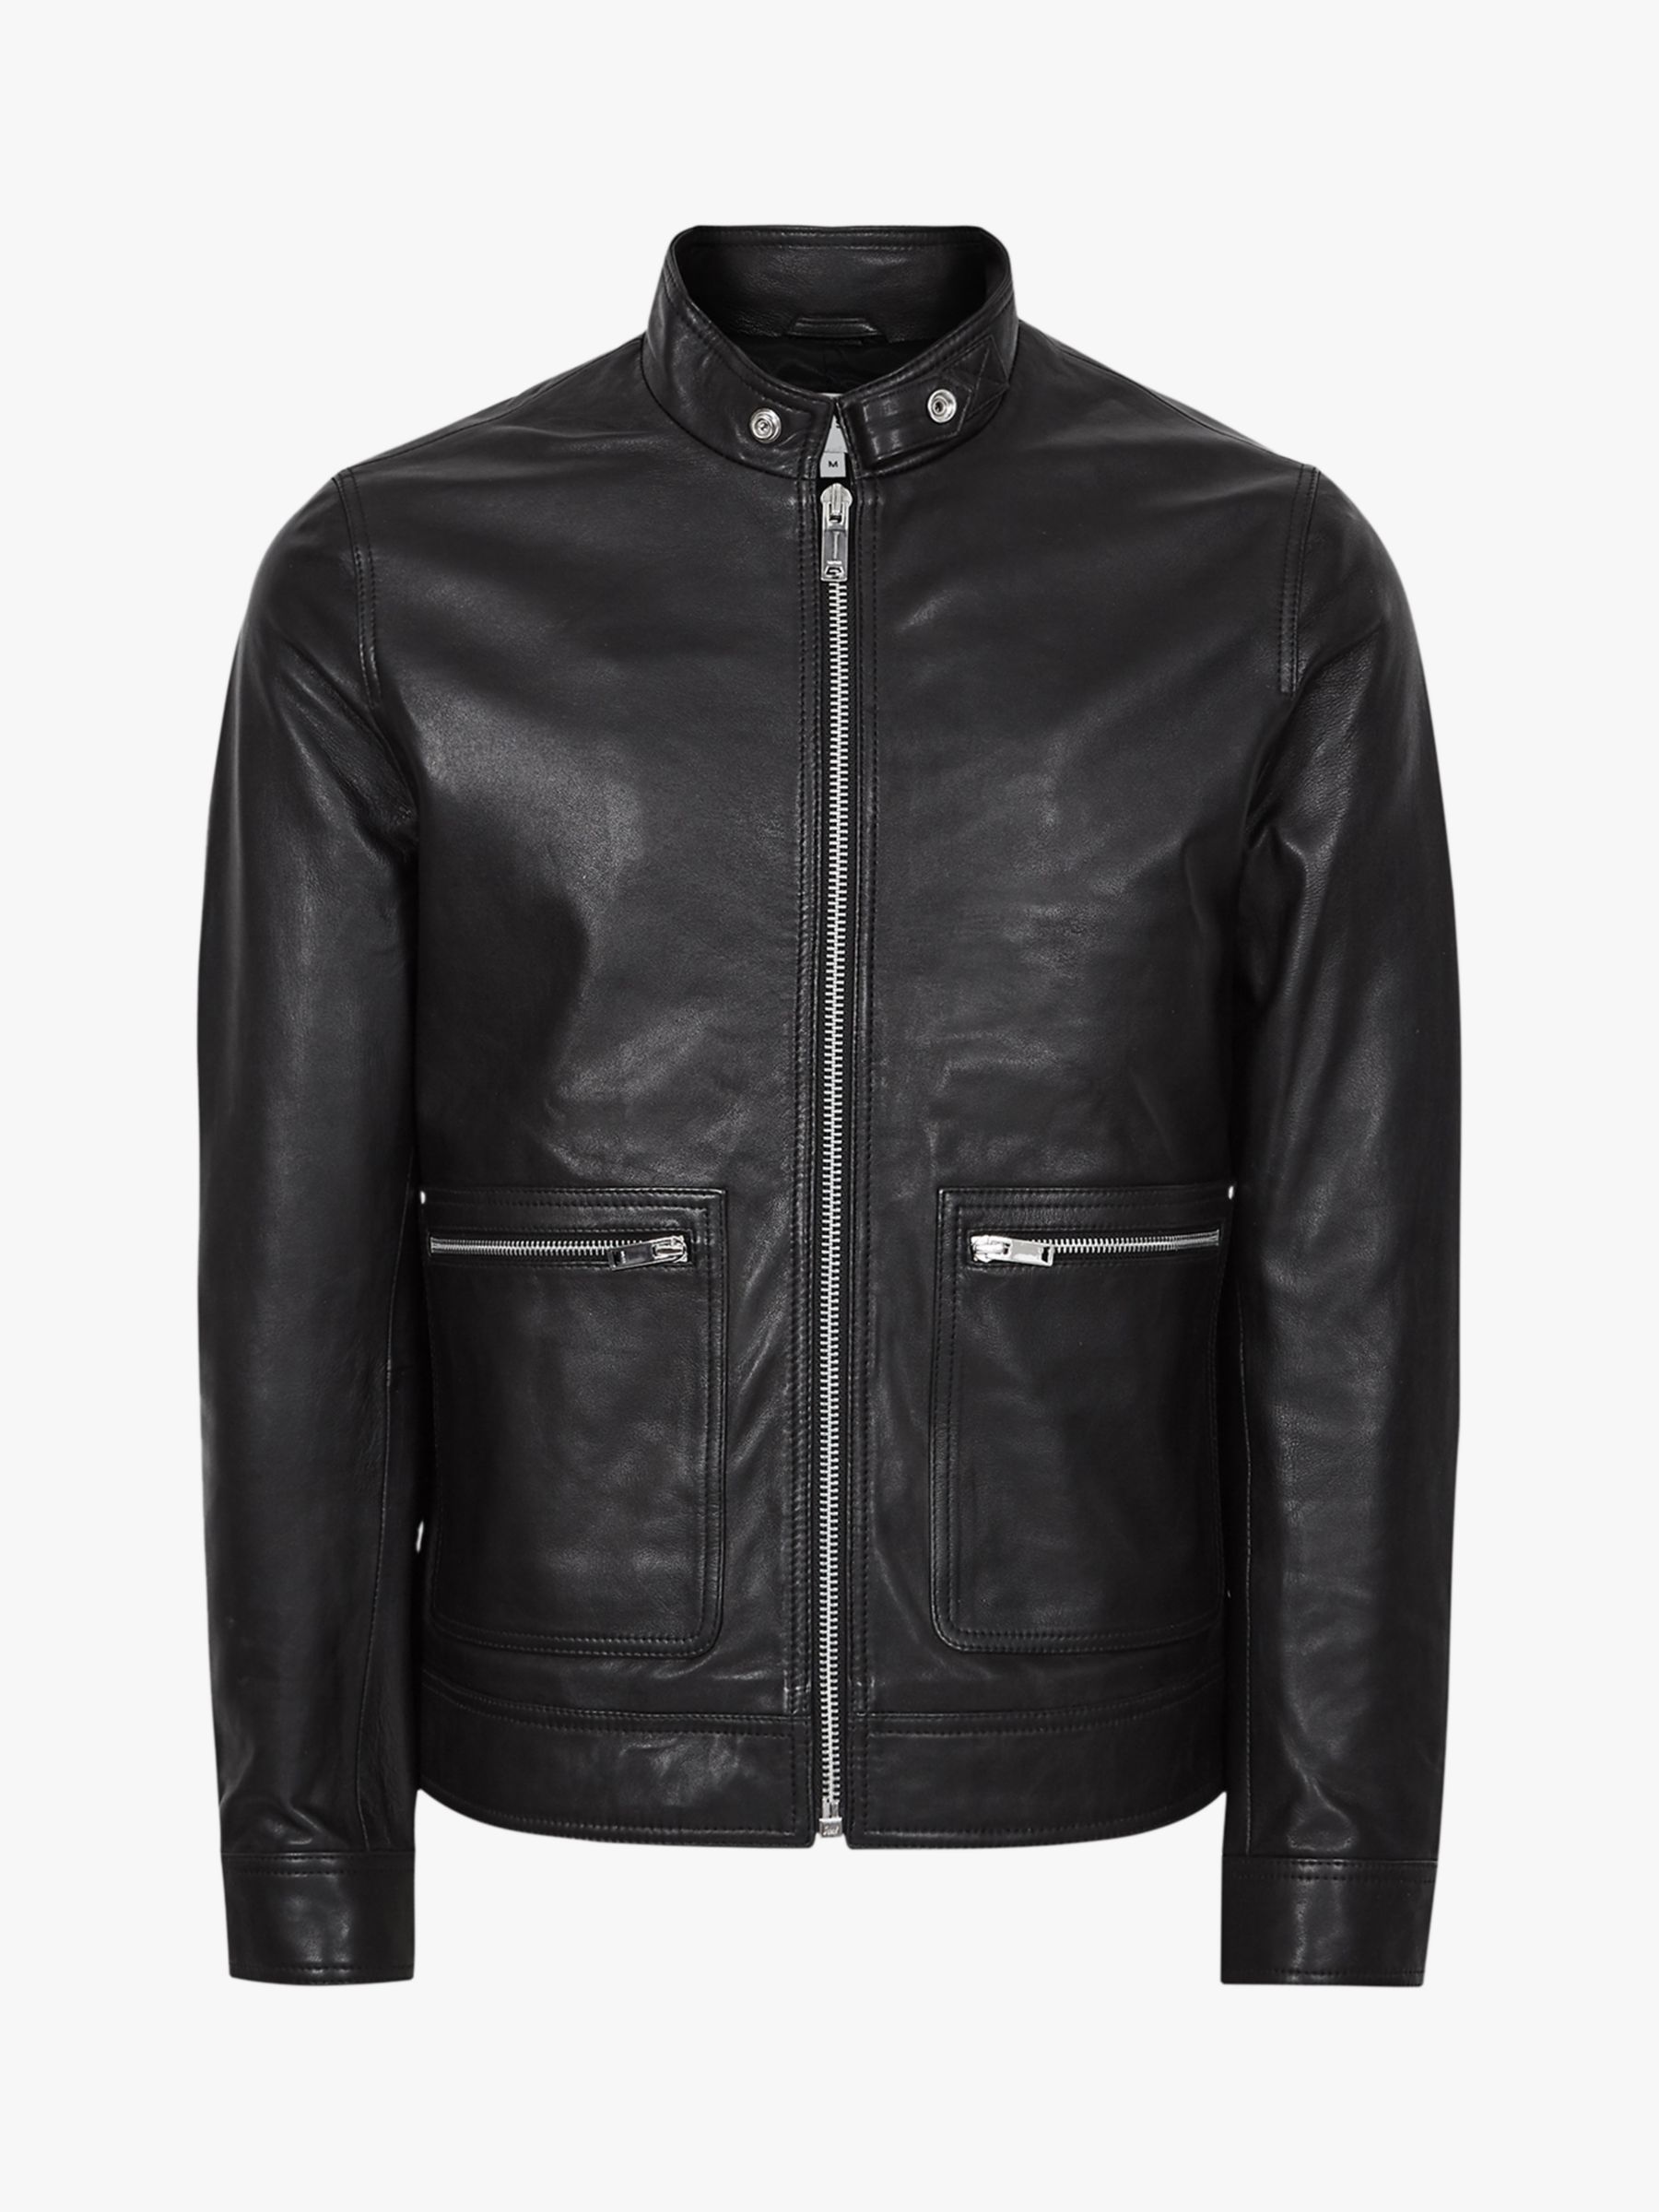 Reiss Martel Leather Bomber Jacket, Black at John Lewis & Partners